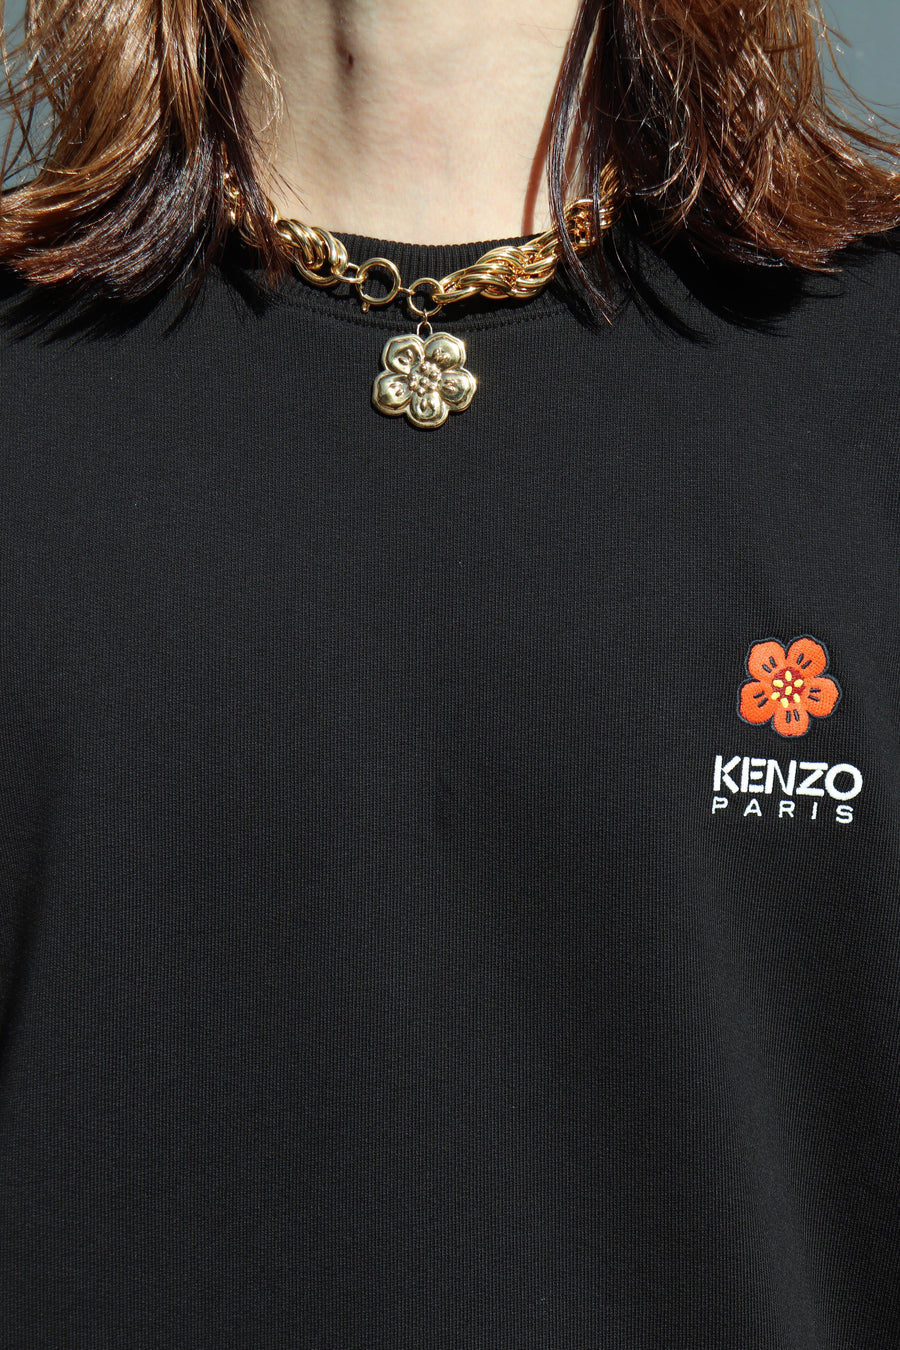 KENZO  BOKE FLOWER CLASSIC SWEATSHIRT(BLACK)